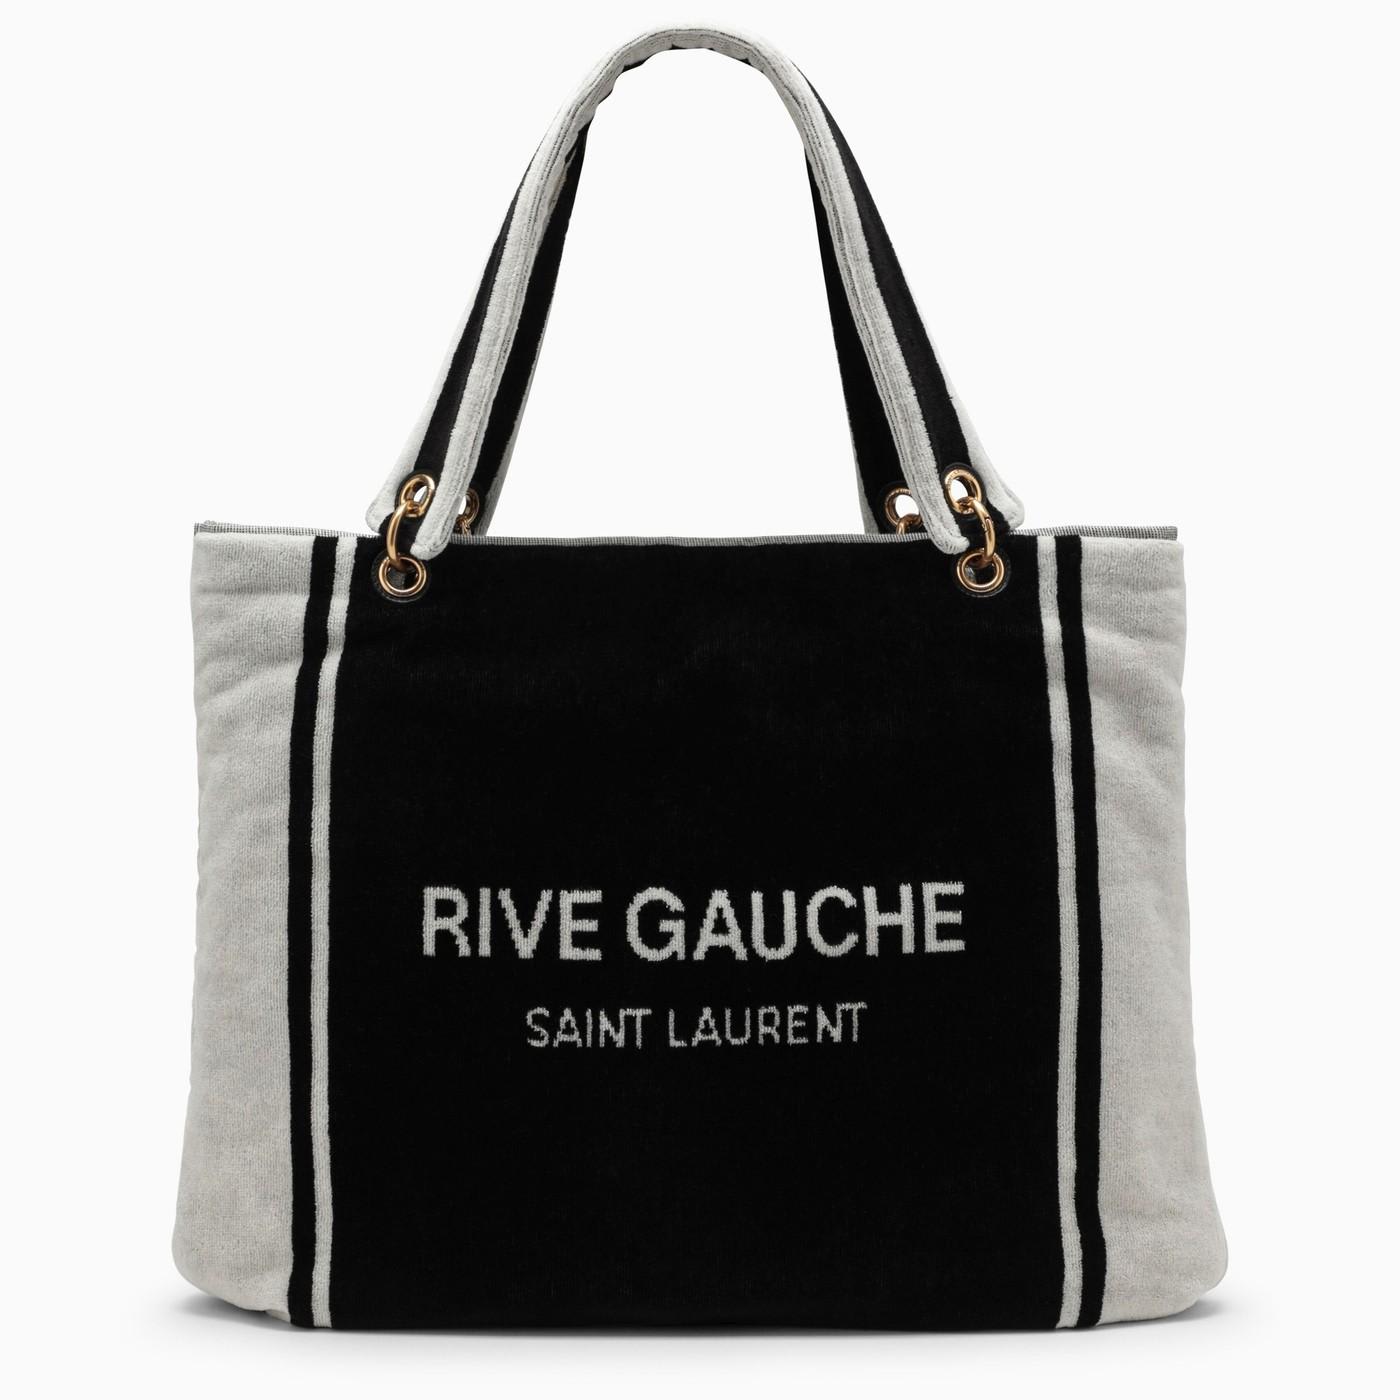 Saint Laurent Rive Gauche Tote In Black And White Terry Cloth In Nero/bianco/nero